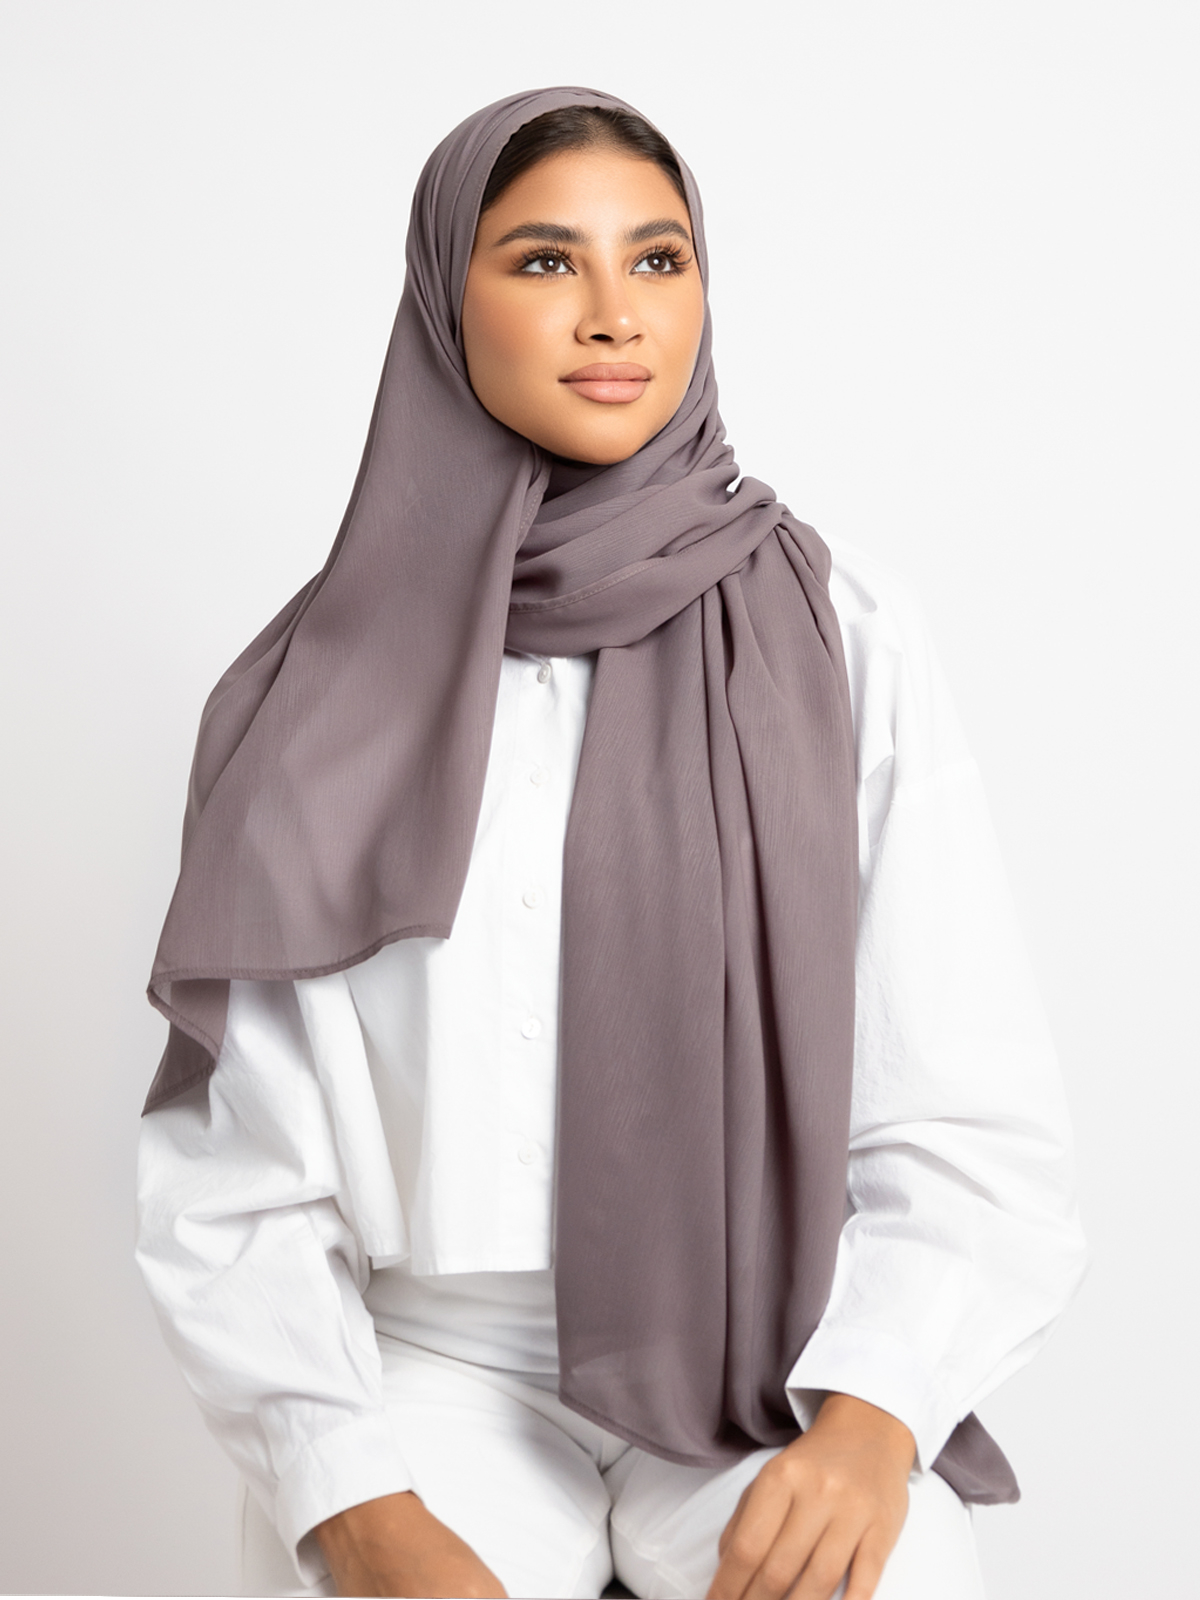 Luxurious chiffon hijab plain tarha 200 cm long titanium color high quality material online in ksa by kaafmeem